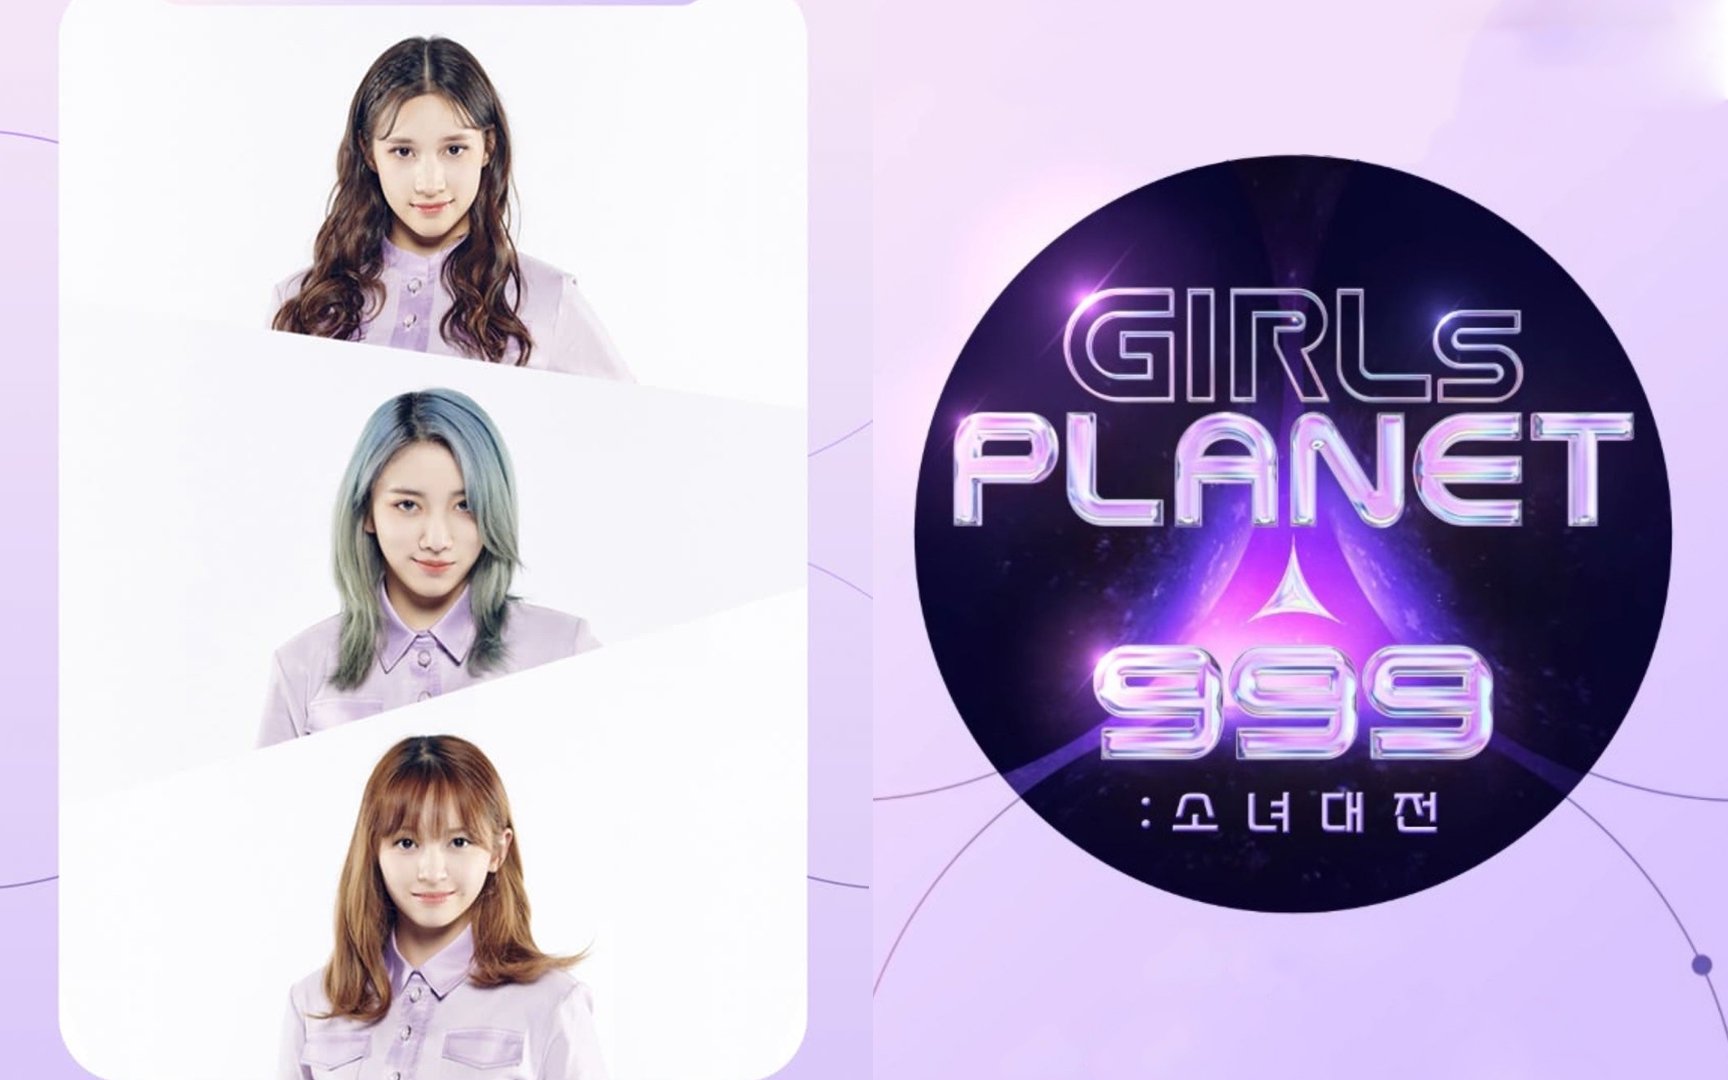 Girls planet 999 contestants